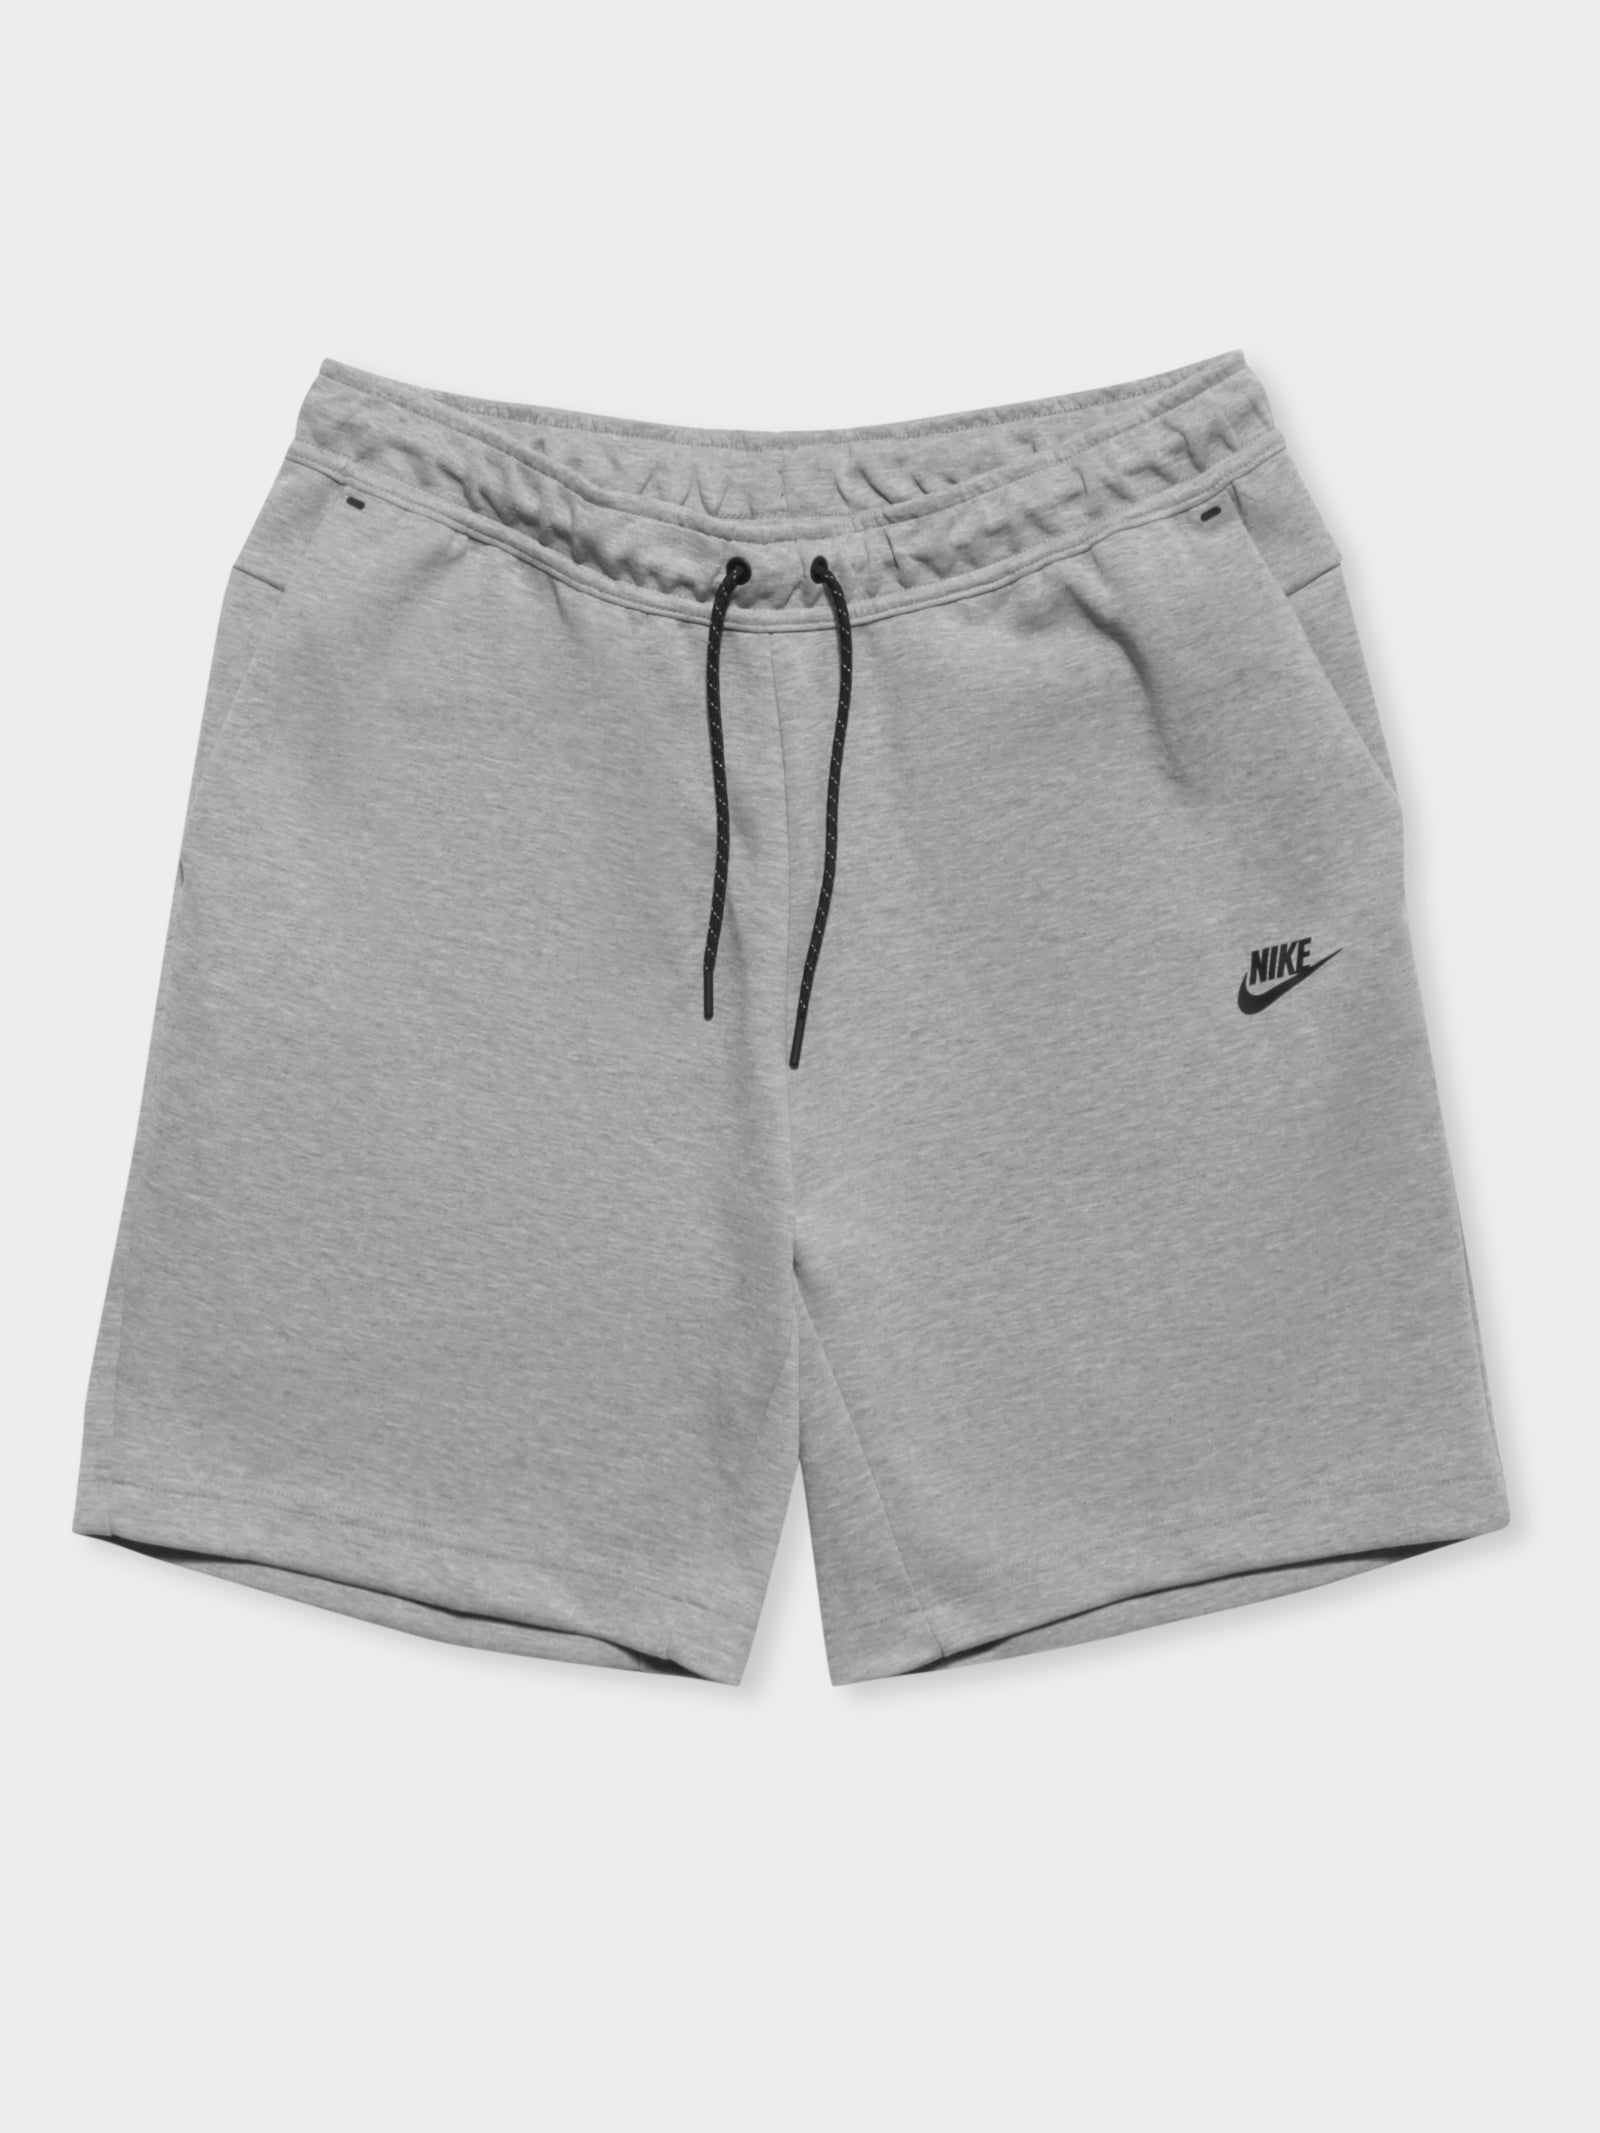 grey nike shorts fleece